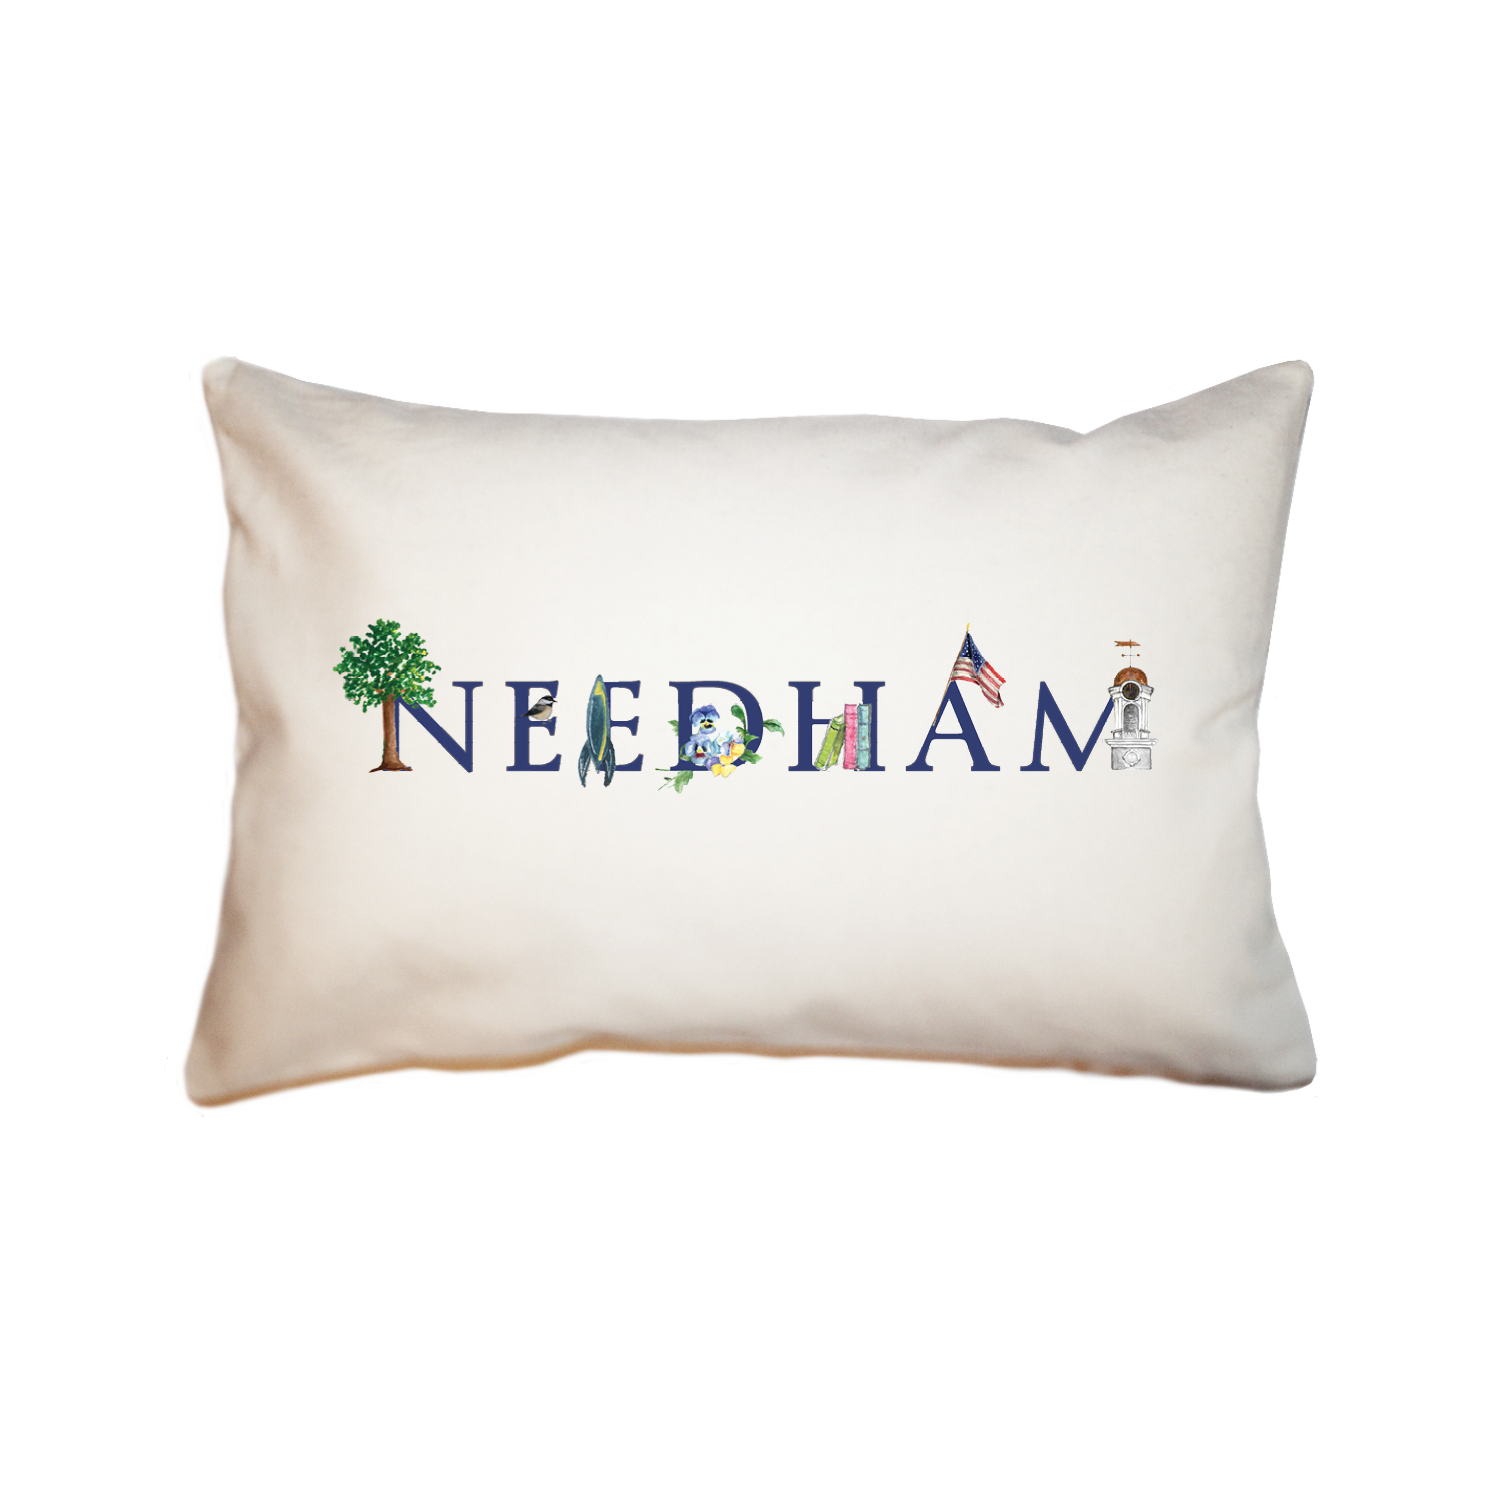 needham large rectangle pillow